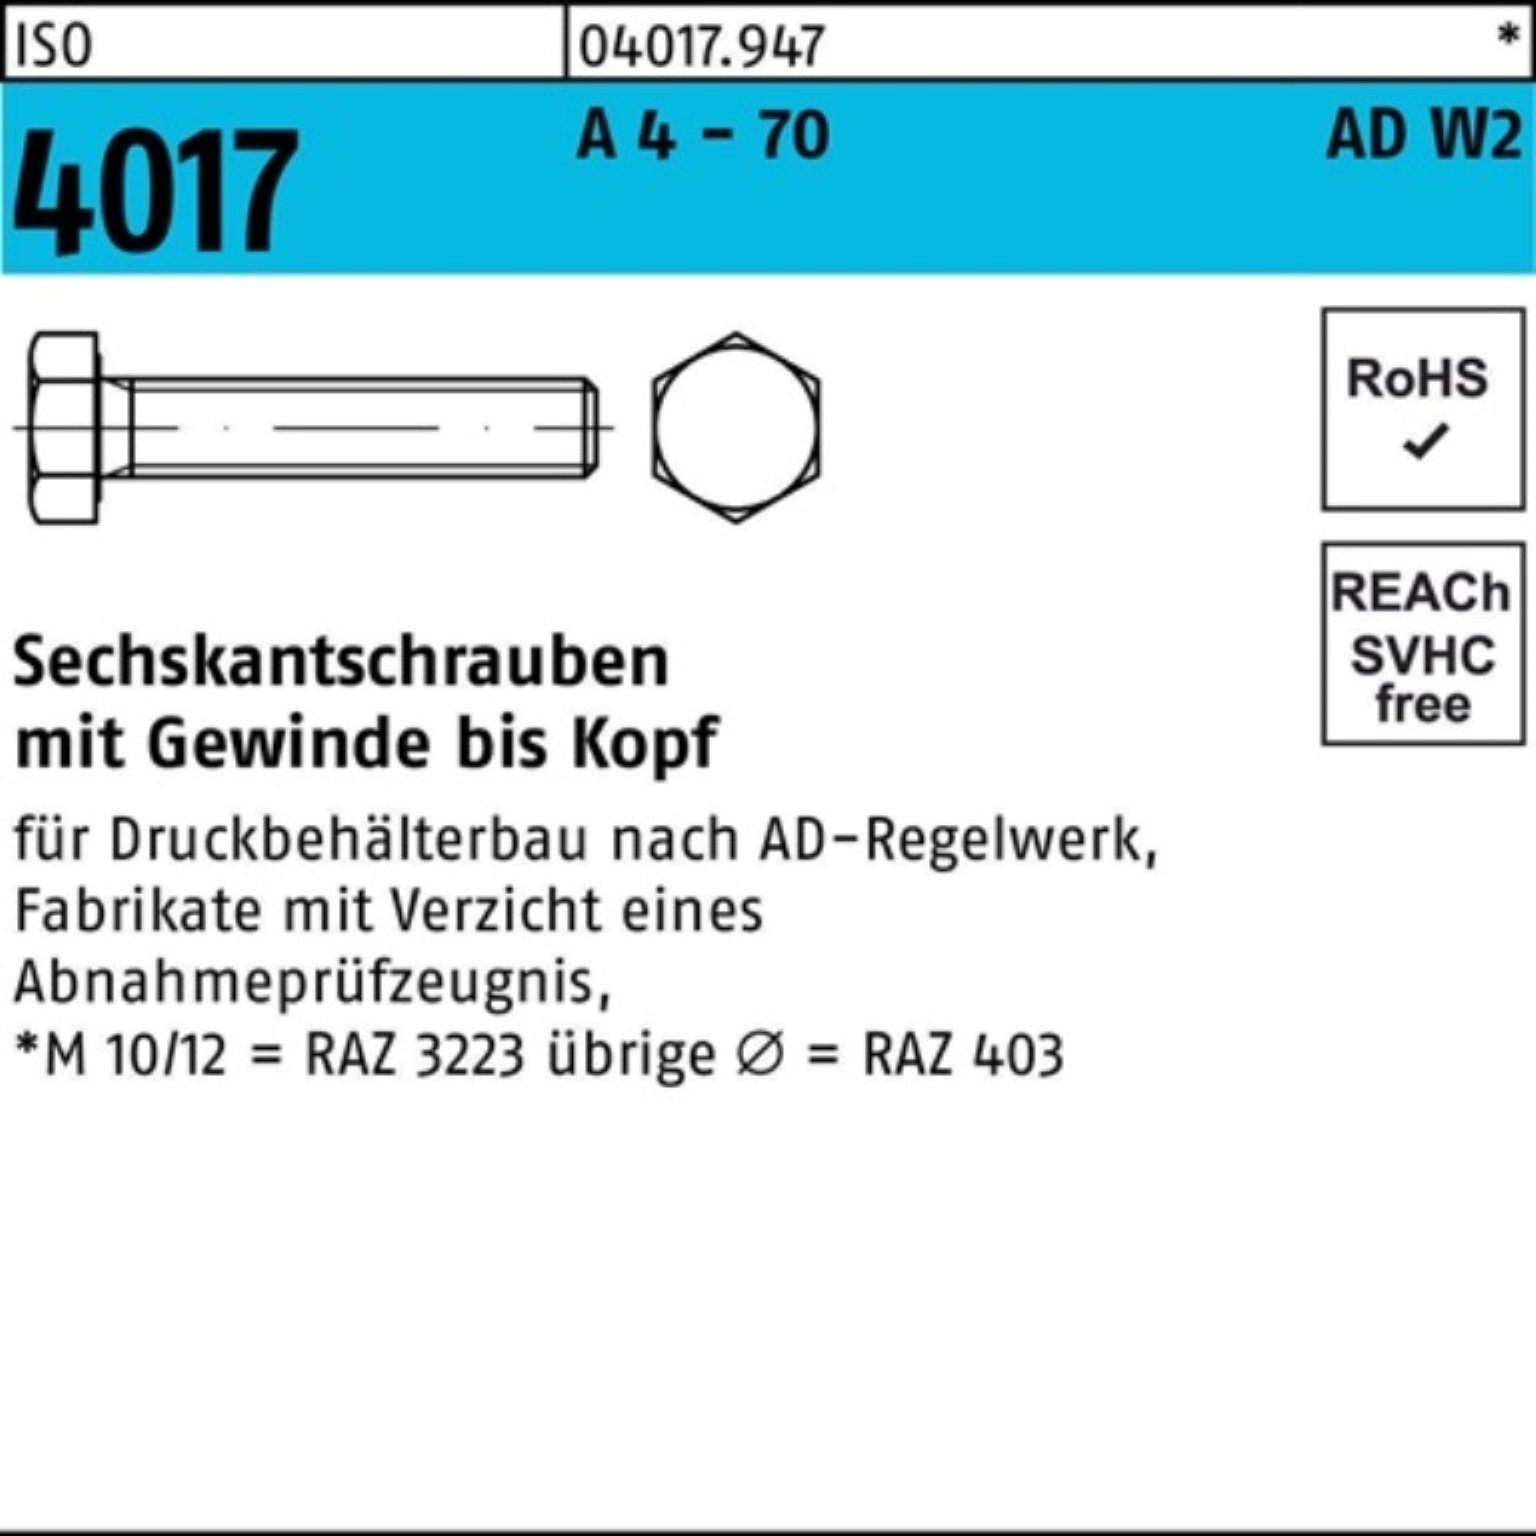 Bufab Sechskantschraube 200er Pack Sechskantschraube ISO 4017 VG M6x 25 A 4 - 70 AD-W2 200 St